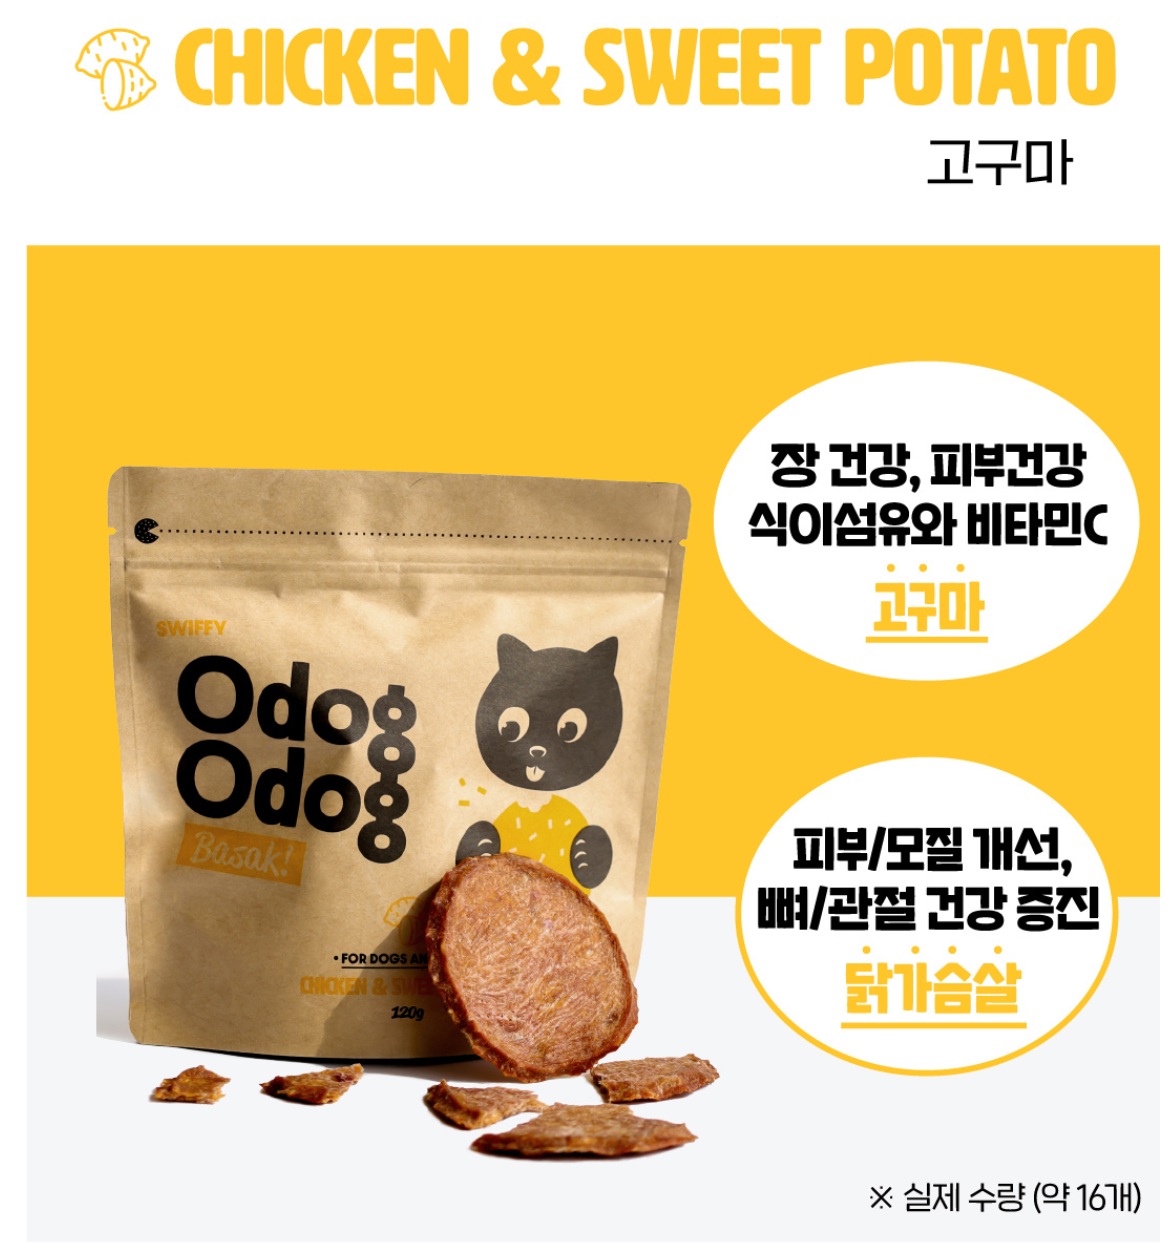 SWIFFY Odog Odog Crispy - Chicken & Sweet Potato